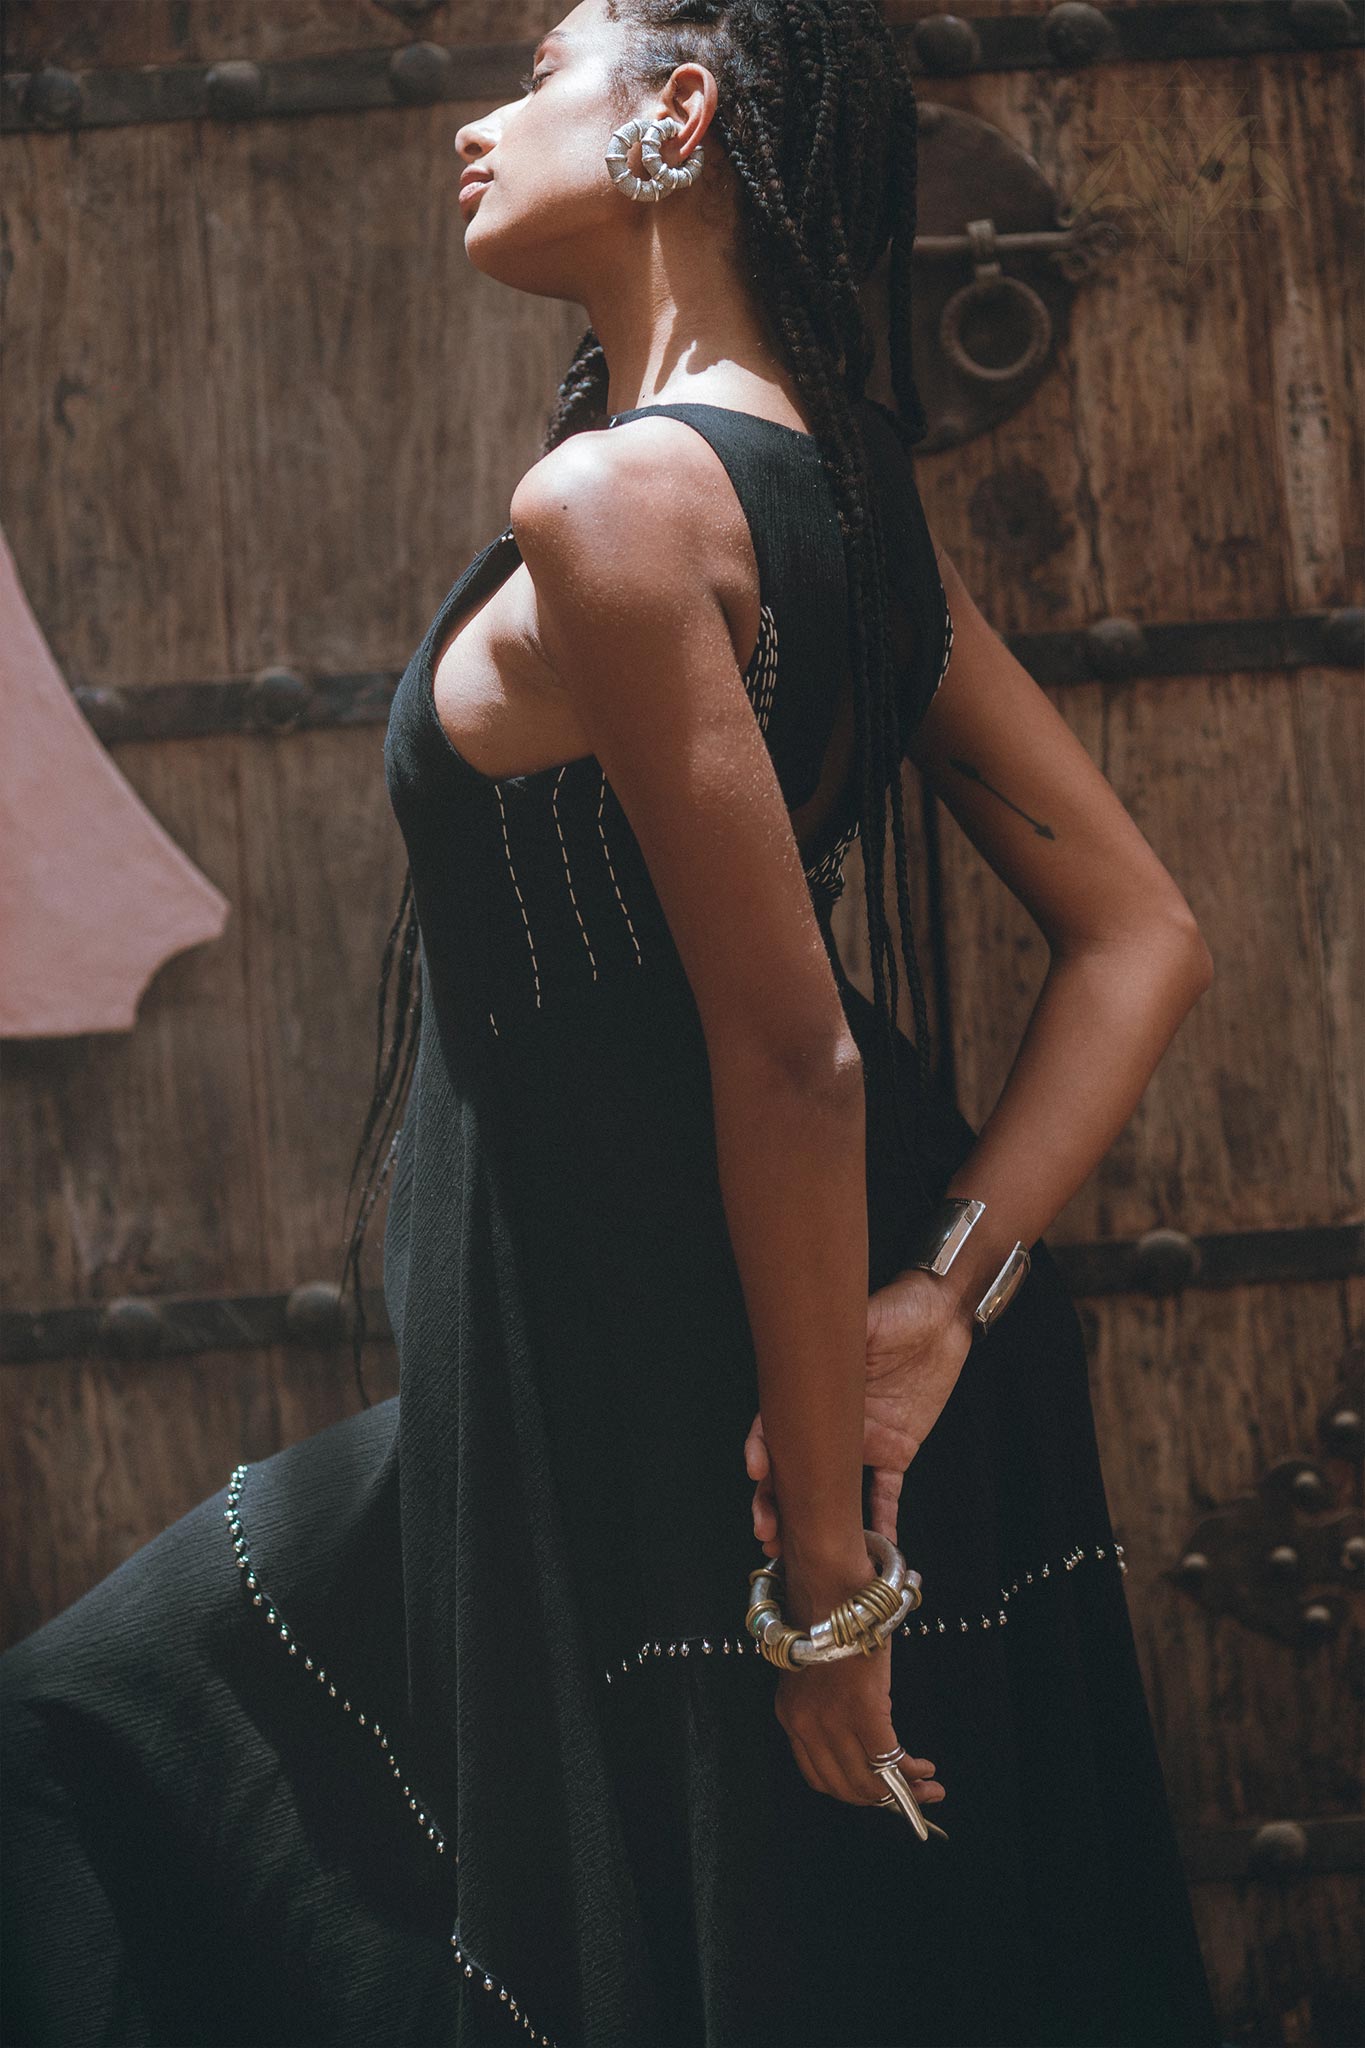 Look your best in a sleek, stylish black minimalist cocktail dress by Aya Sacred Wear.